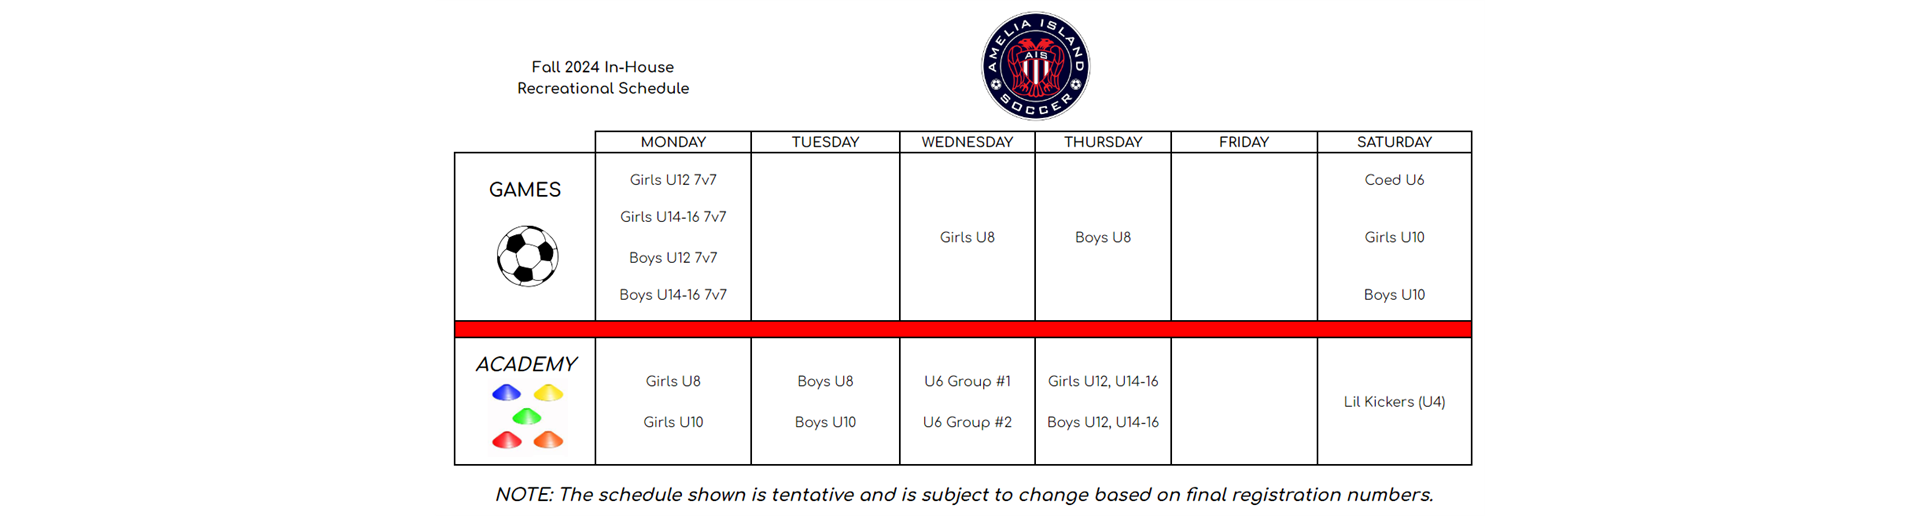 Fall 2024 Recreational Soccer Schedule